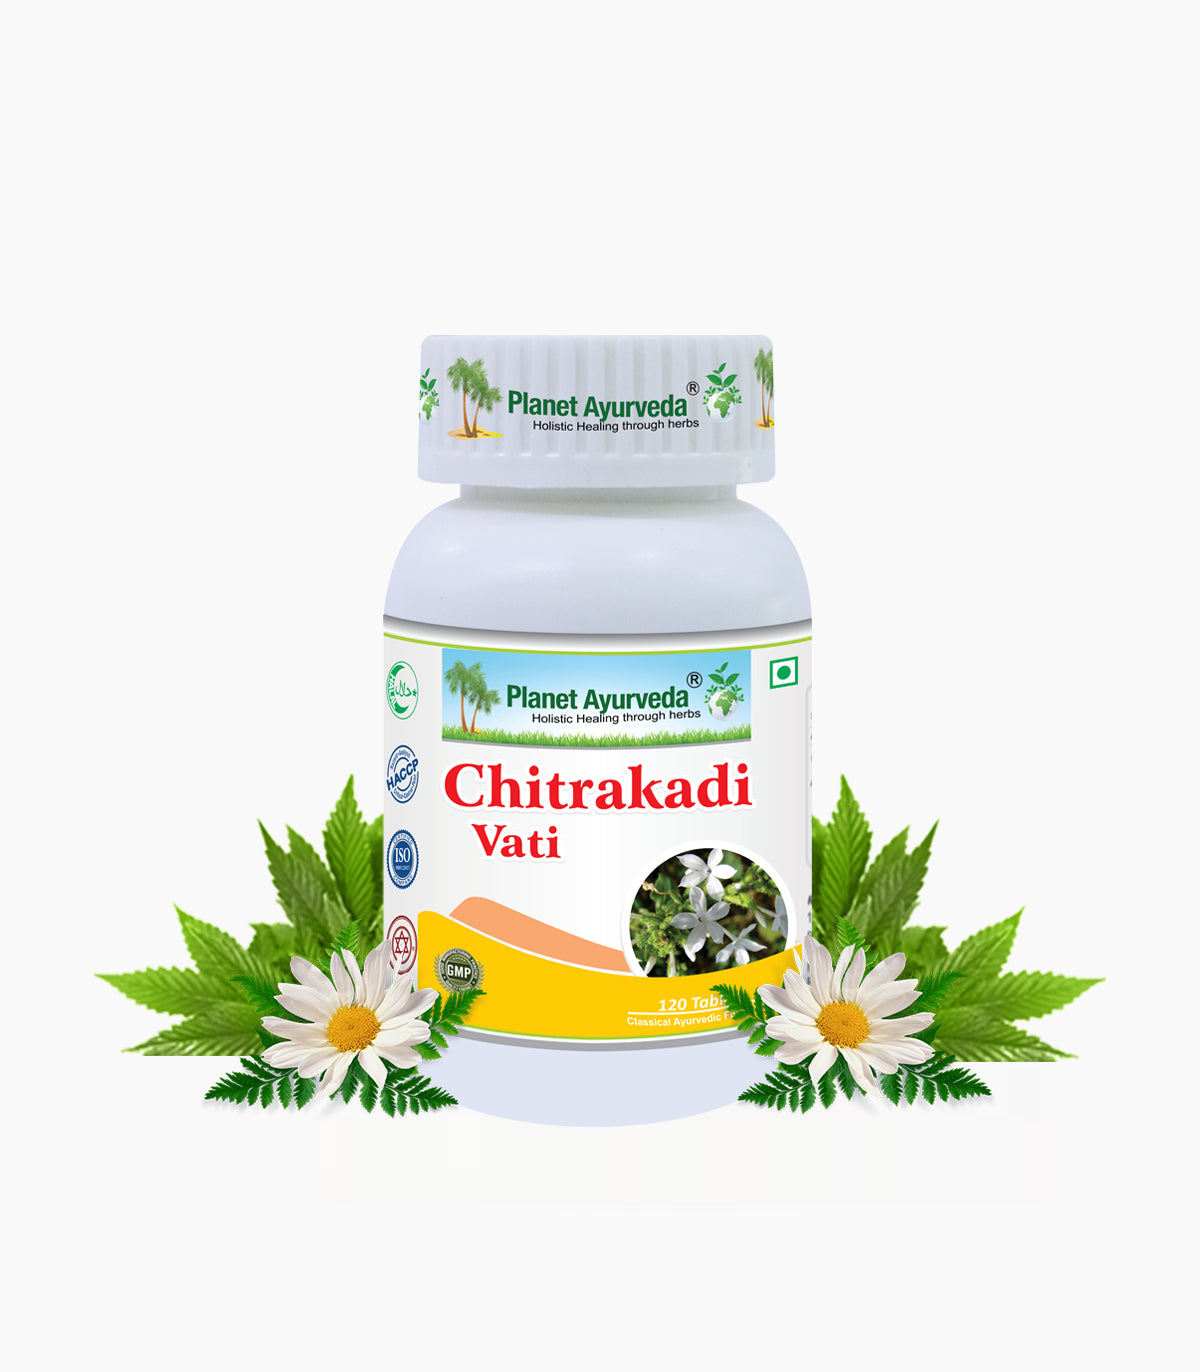 Chitrakadi Vati Bottle of 120 Tablet